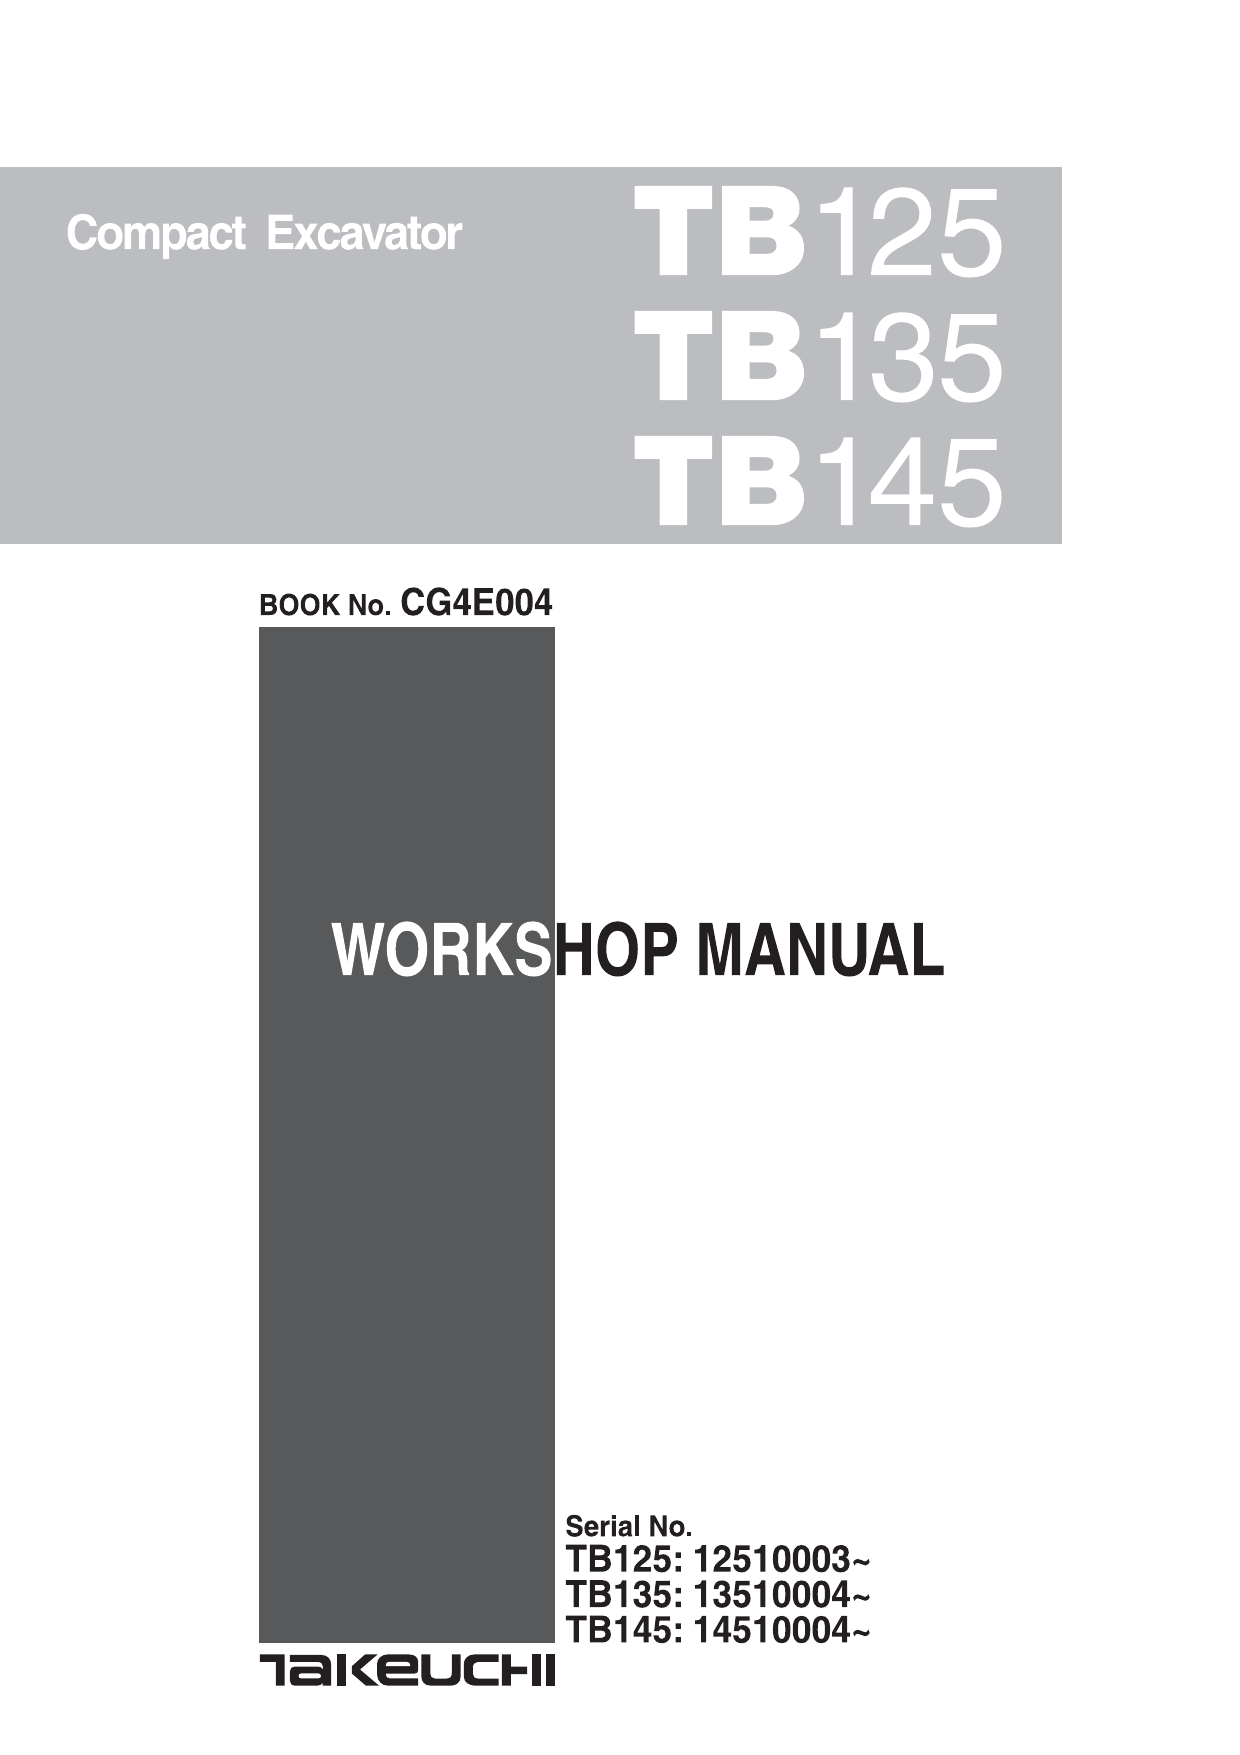 Takeuchi TB125, TB135, TB145 compact excavator workshop manual Preview image 6